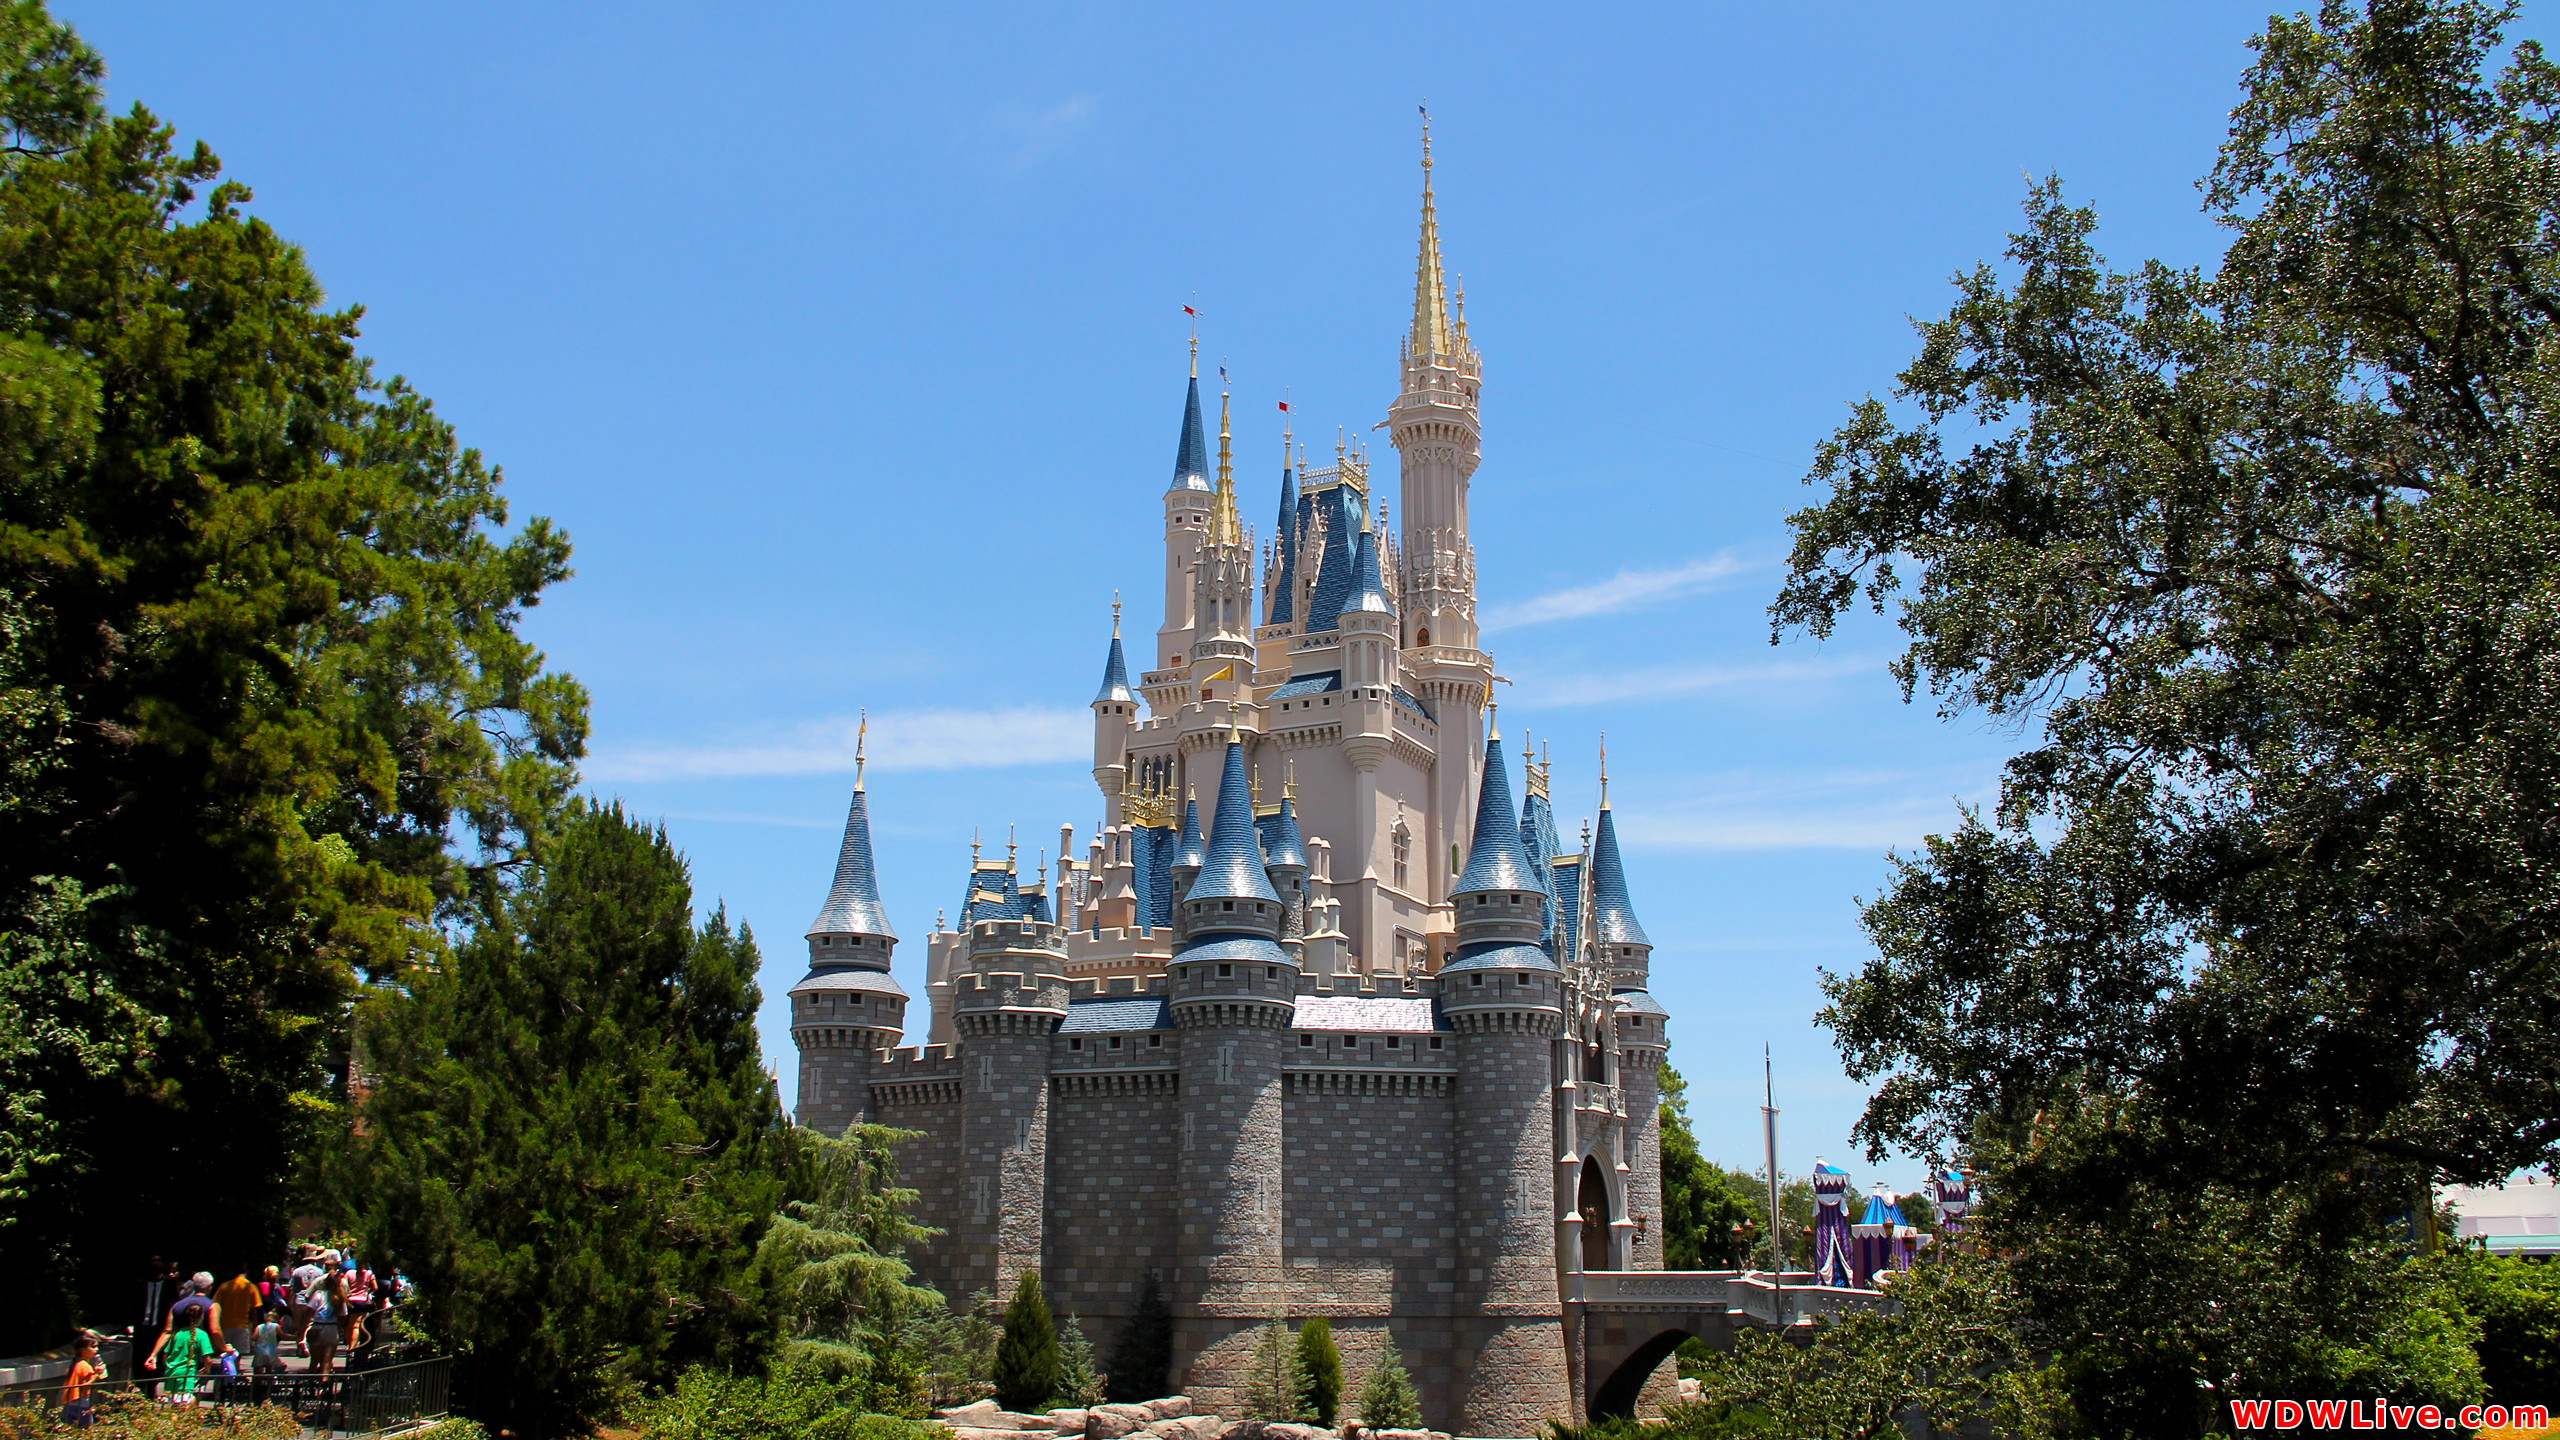 Cinderella Castle Side view of Cinderella Castle against a blue sky